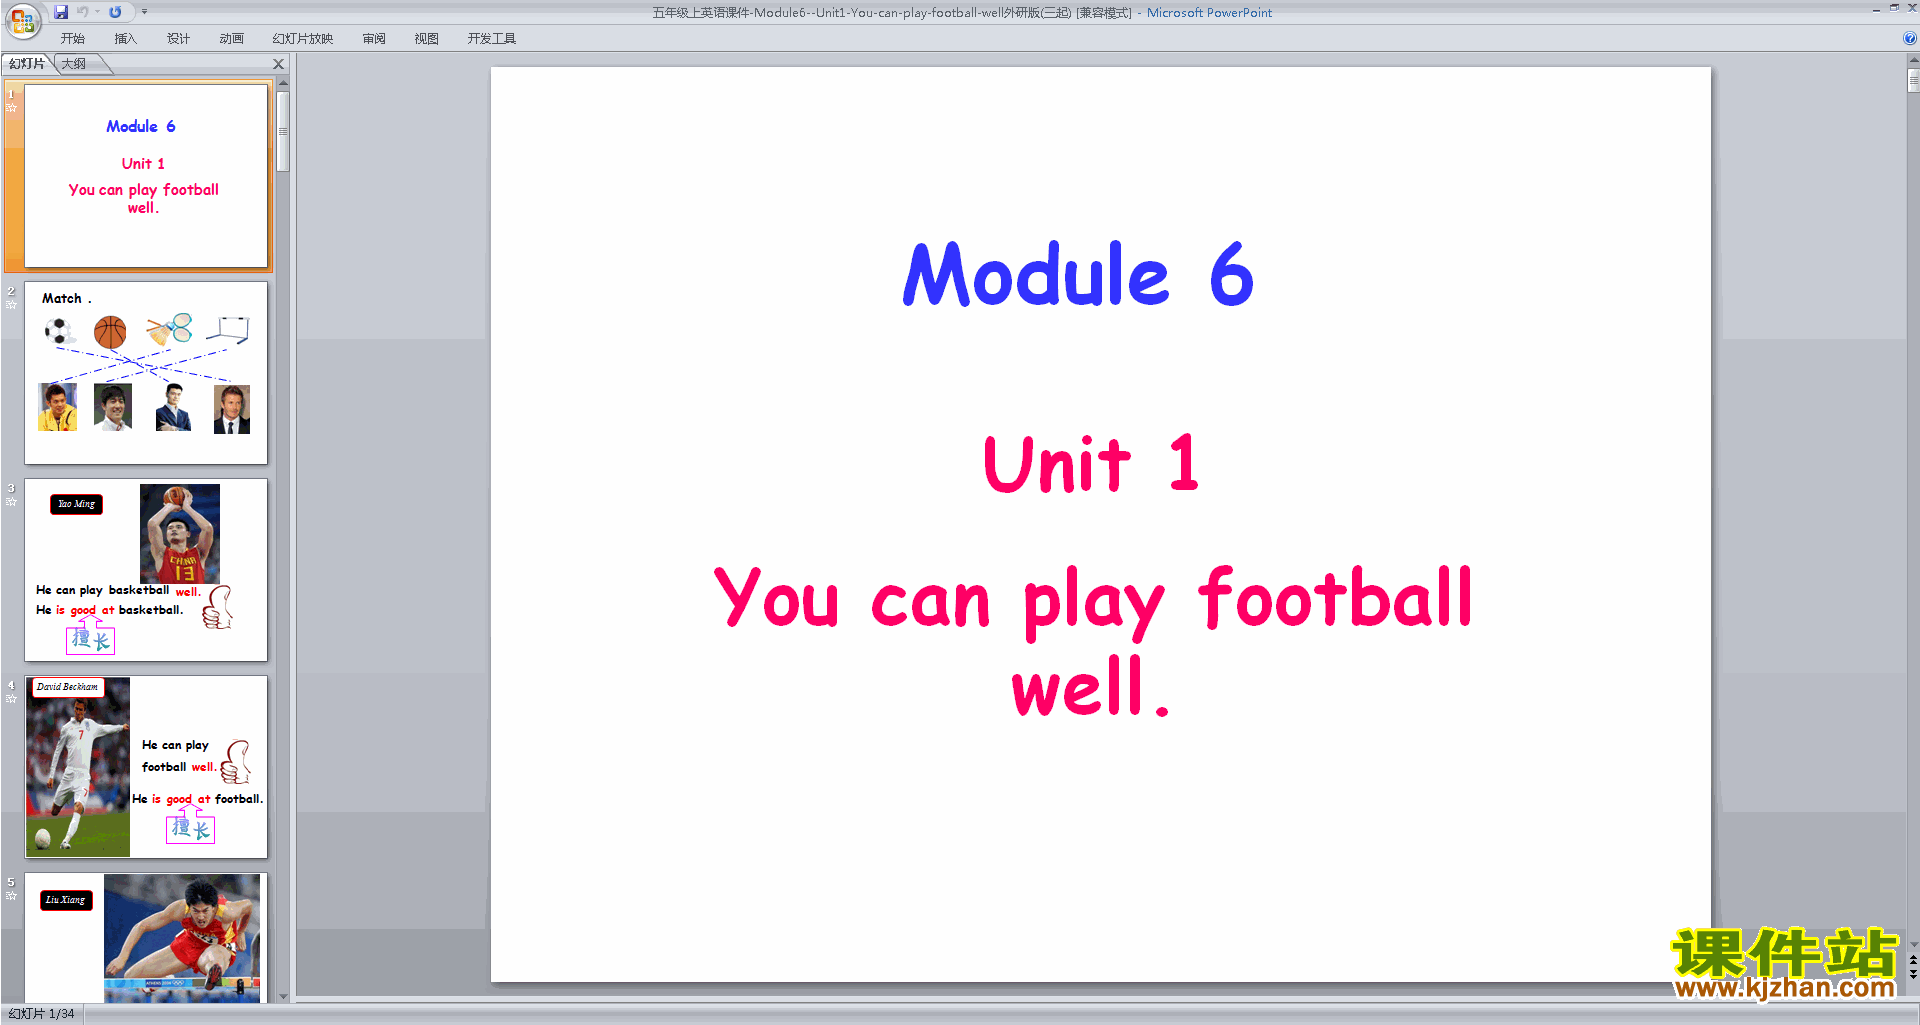 пModule6 Unit1 You can play football wellpptμ15